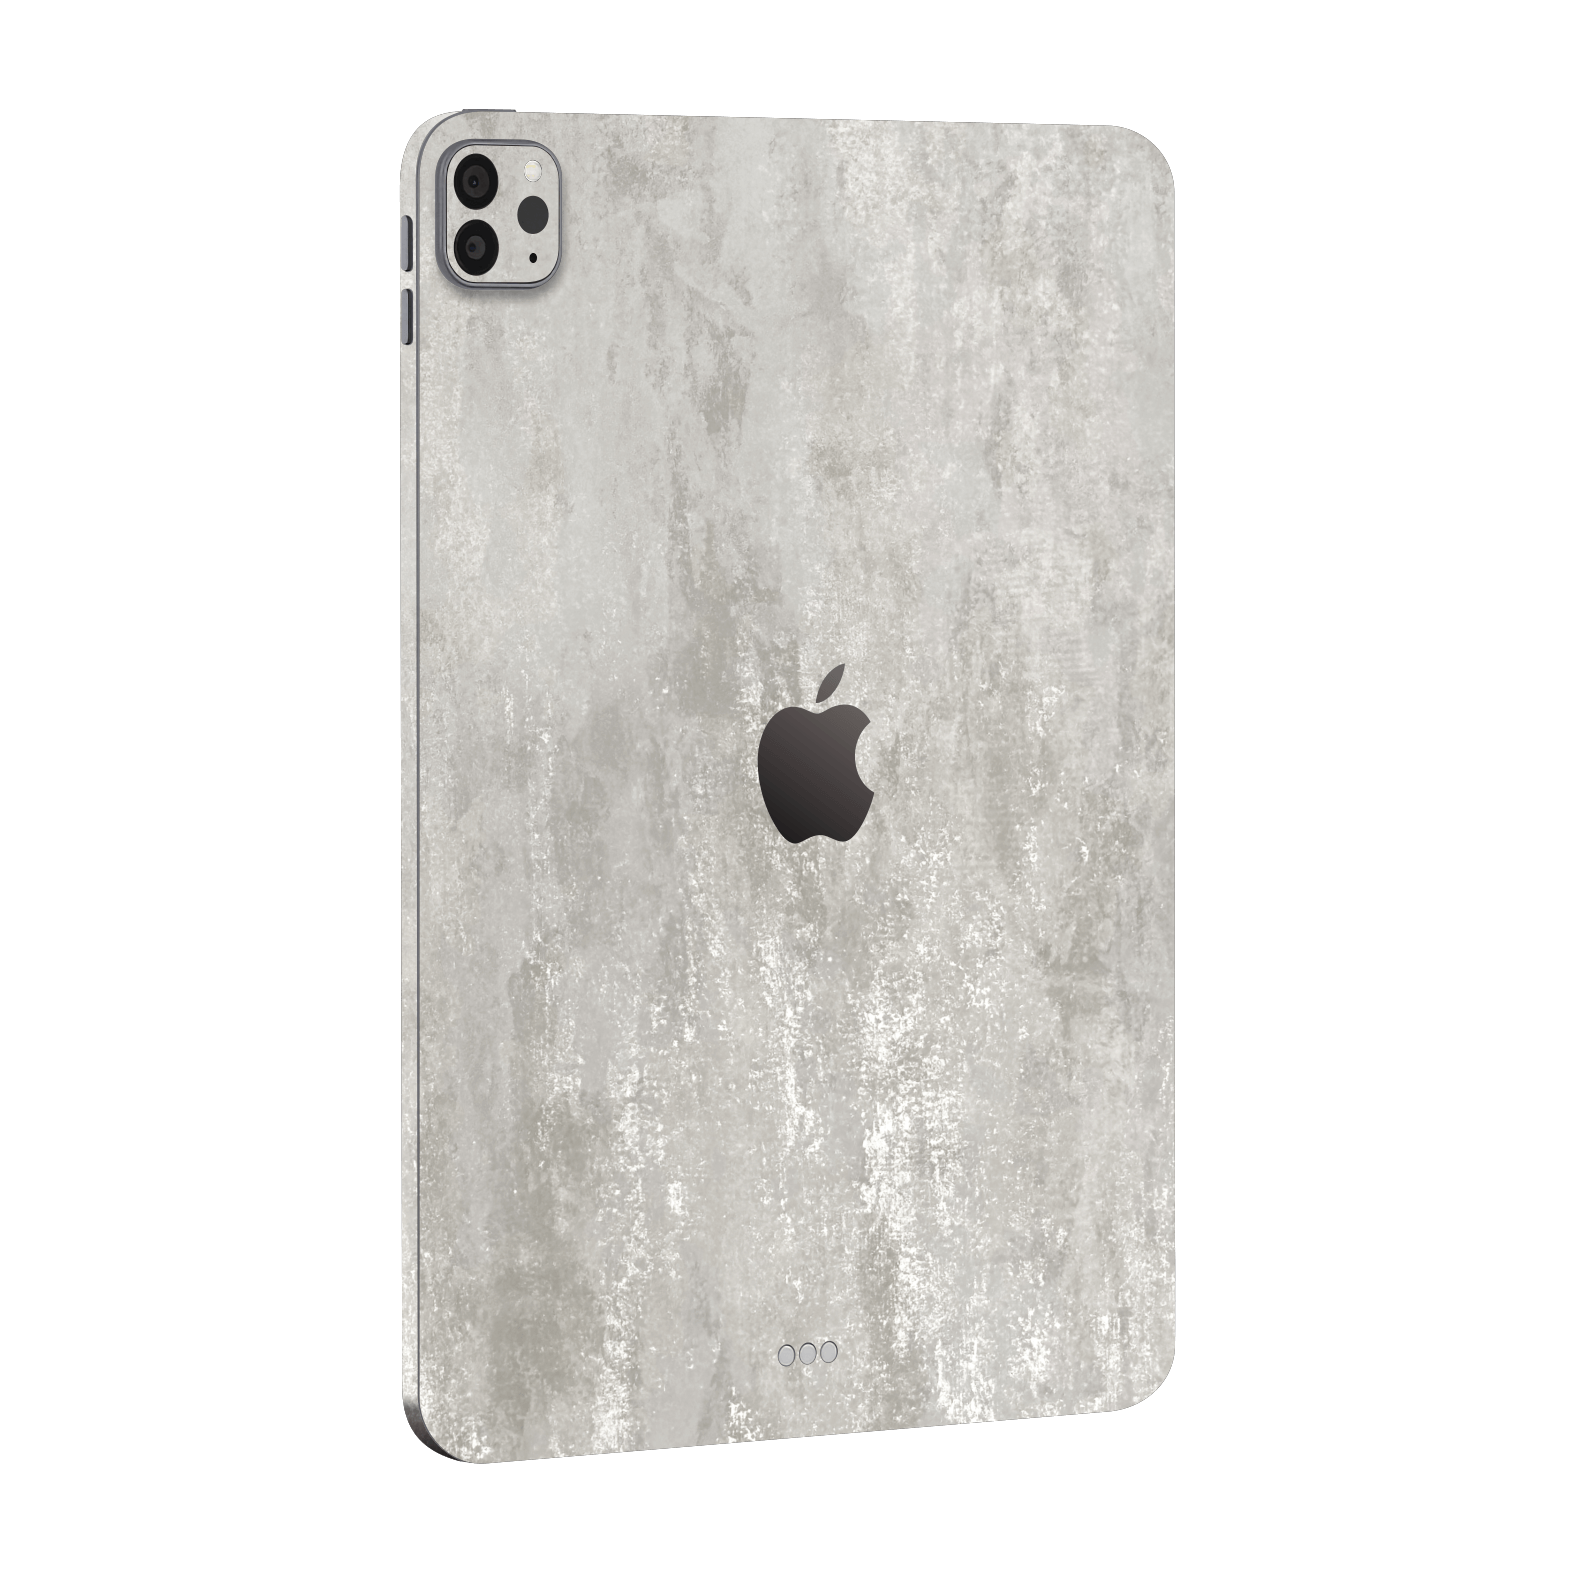 iPad PRO 12.9” (M2, 2022) Luxuria Silver Stone Skin Wrap Sticker Decal Cover Protector by EasySkinz | EasySkinz.com